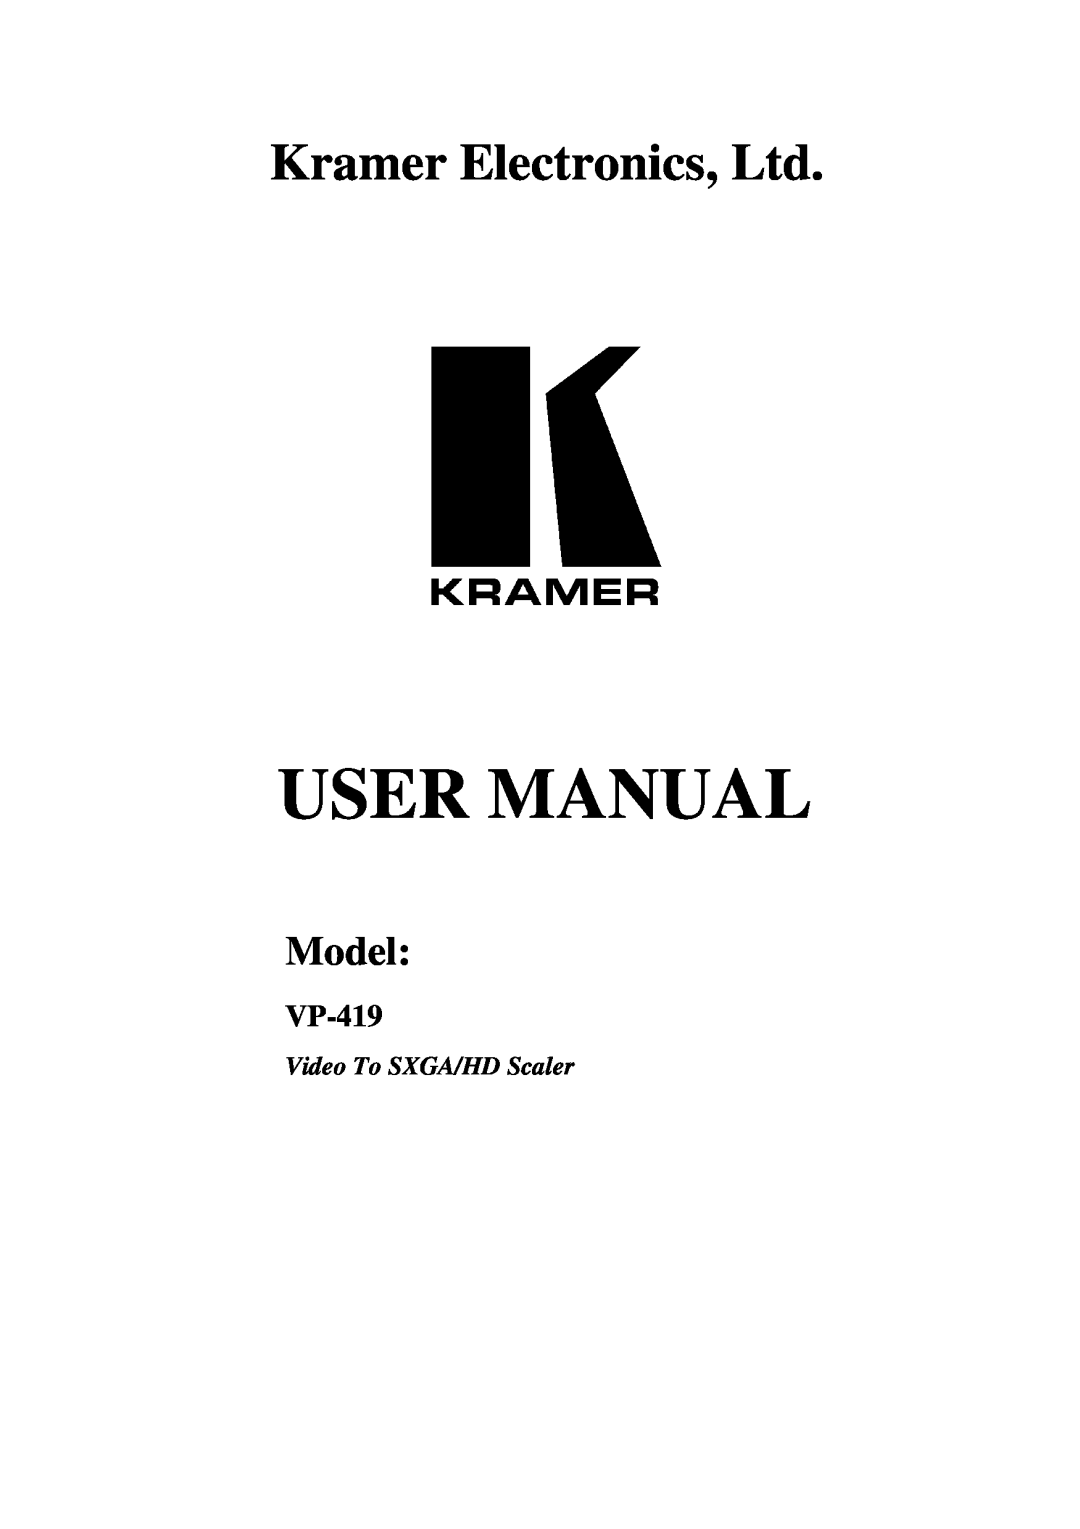 Kramer Electronics VP-419 user manual User Manual, Model, Video To SXGA/HD Scaler 